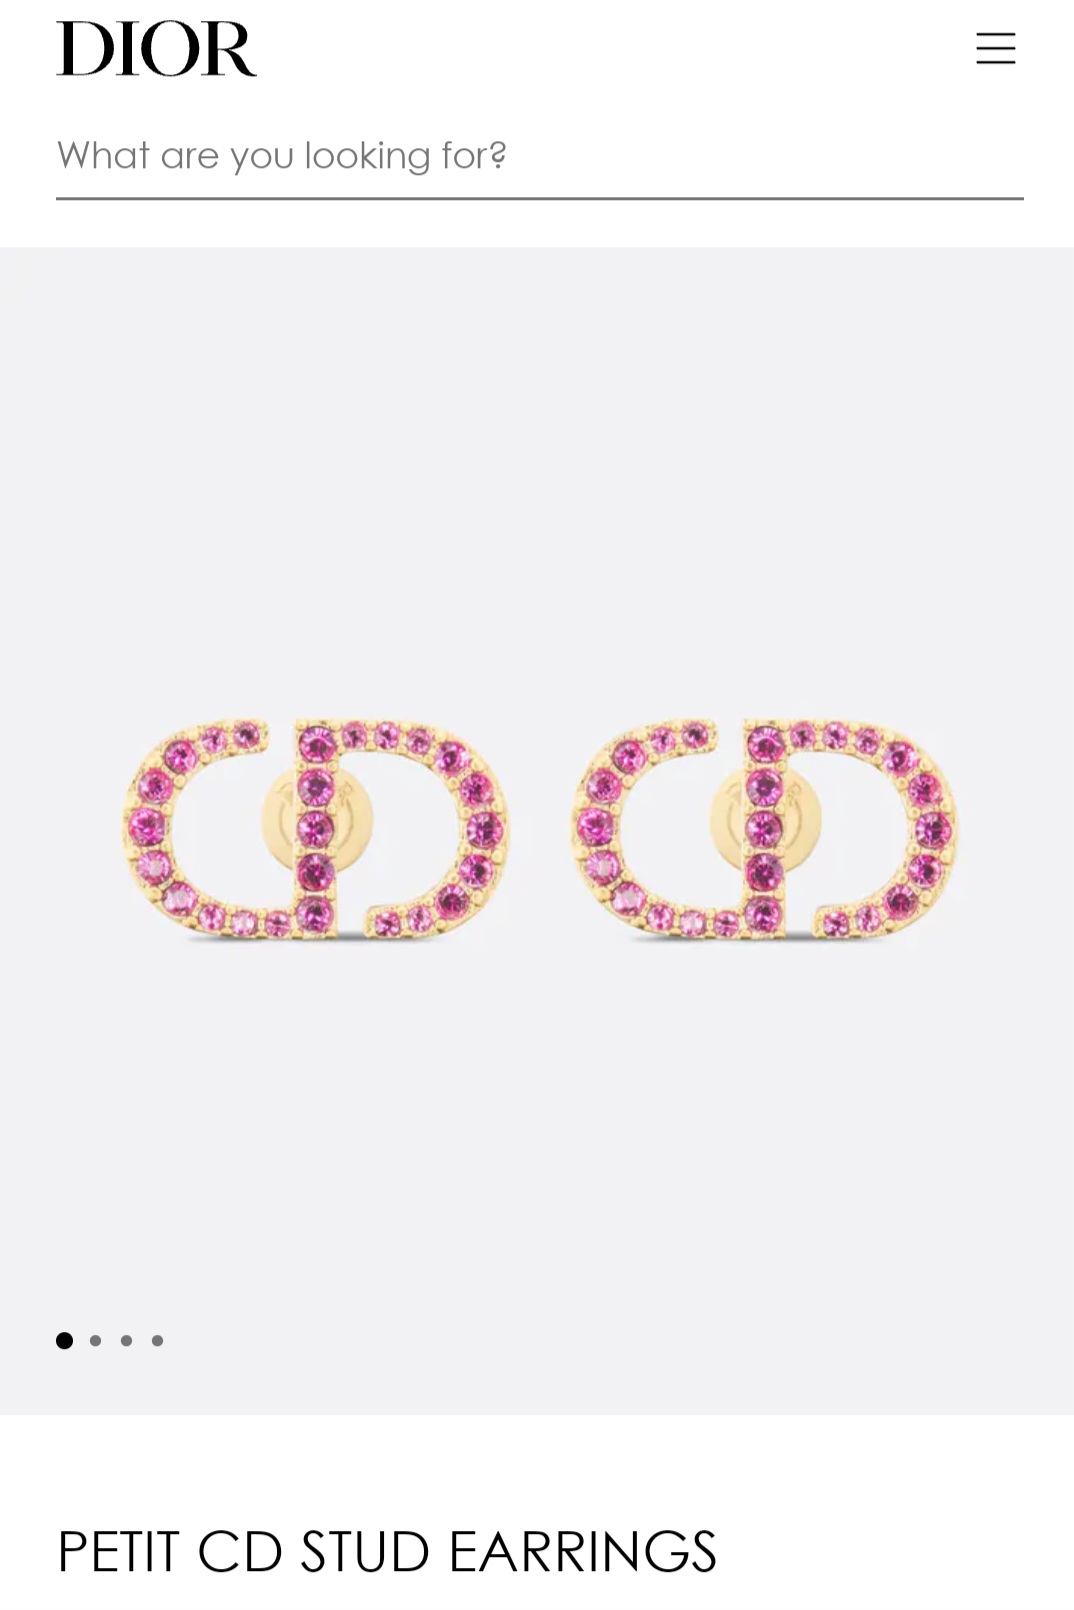 Dior Petit CD Studs earrings